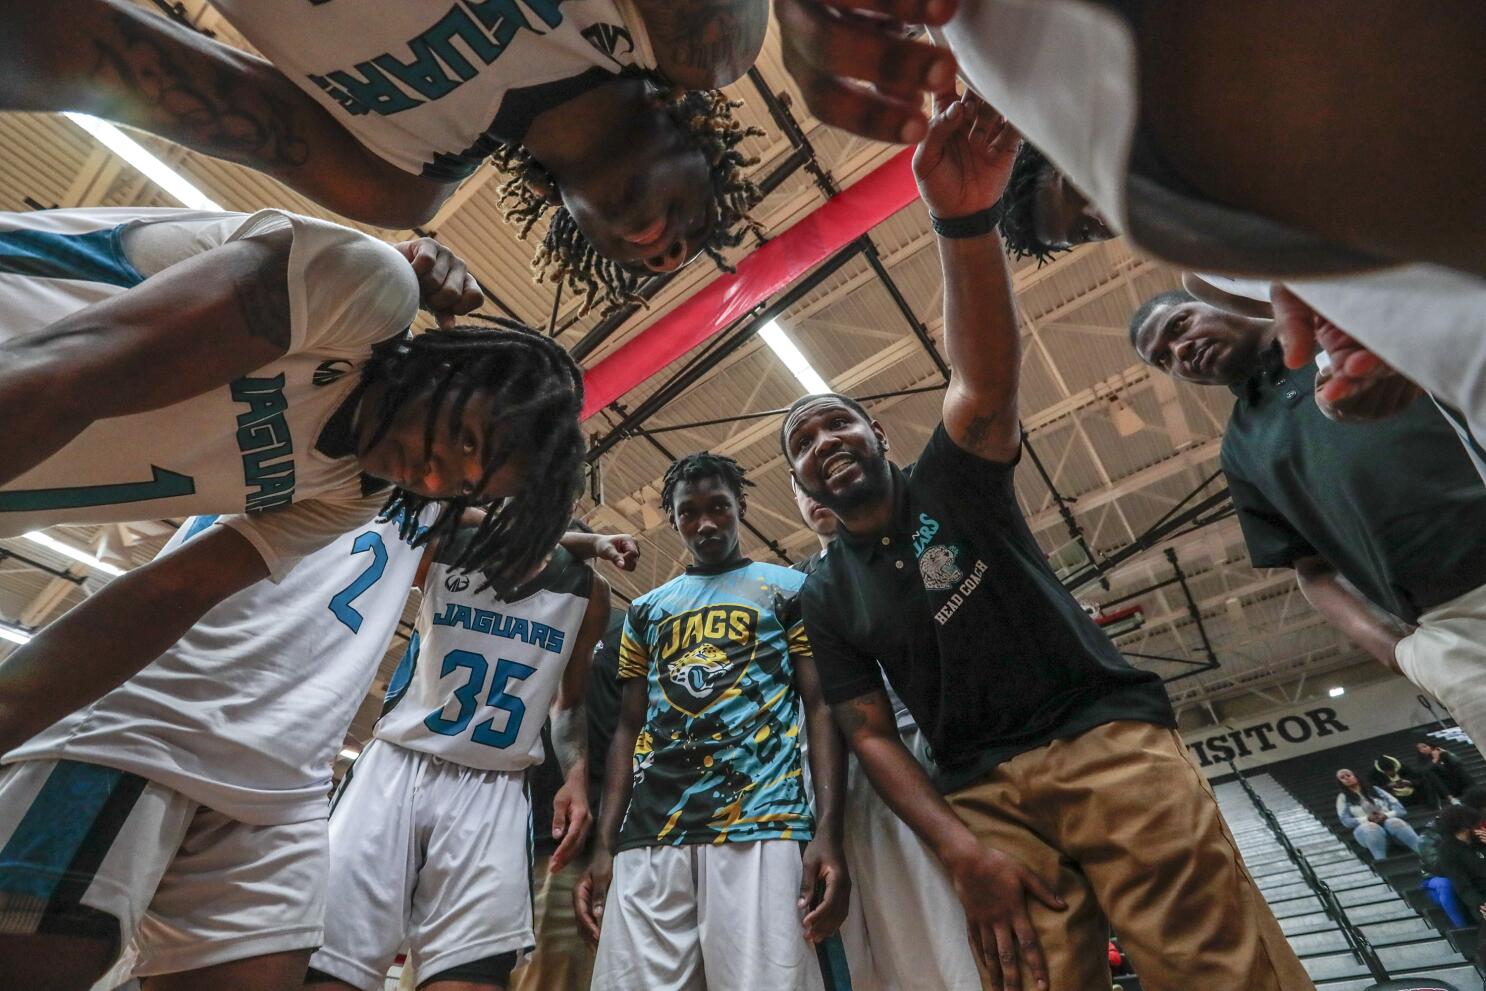 A promise kept: Flint native donates uniforms to Hamady basketball team